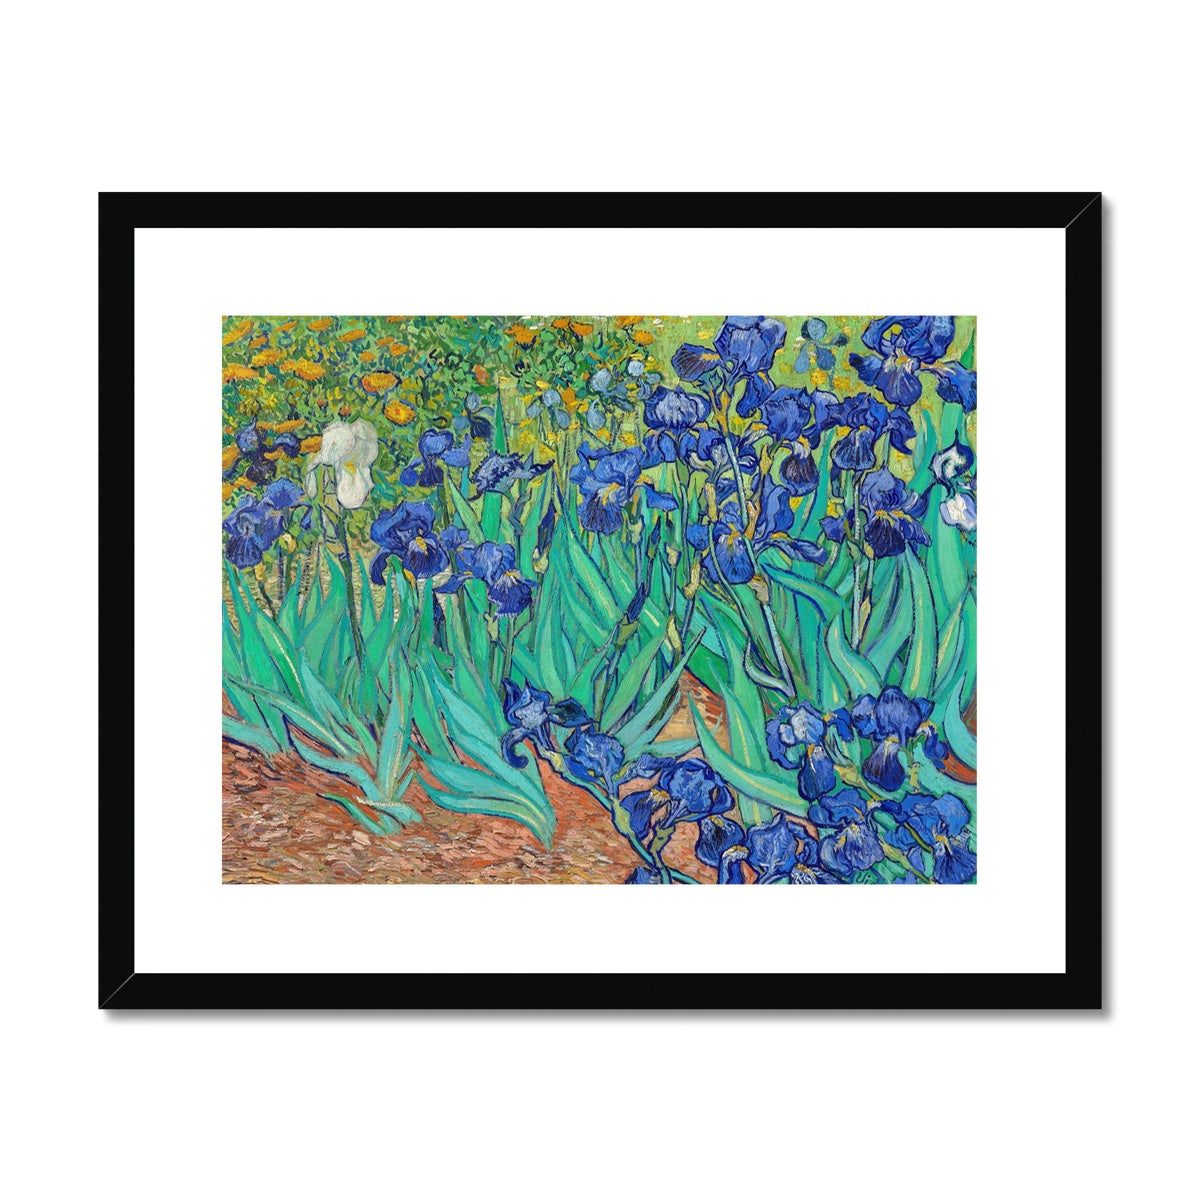 Vincent Van Gogh Framed Open Edition Art Print. 'Irises'. Art Gallery Historic Art